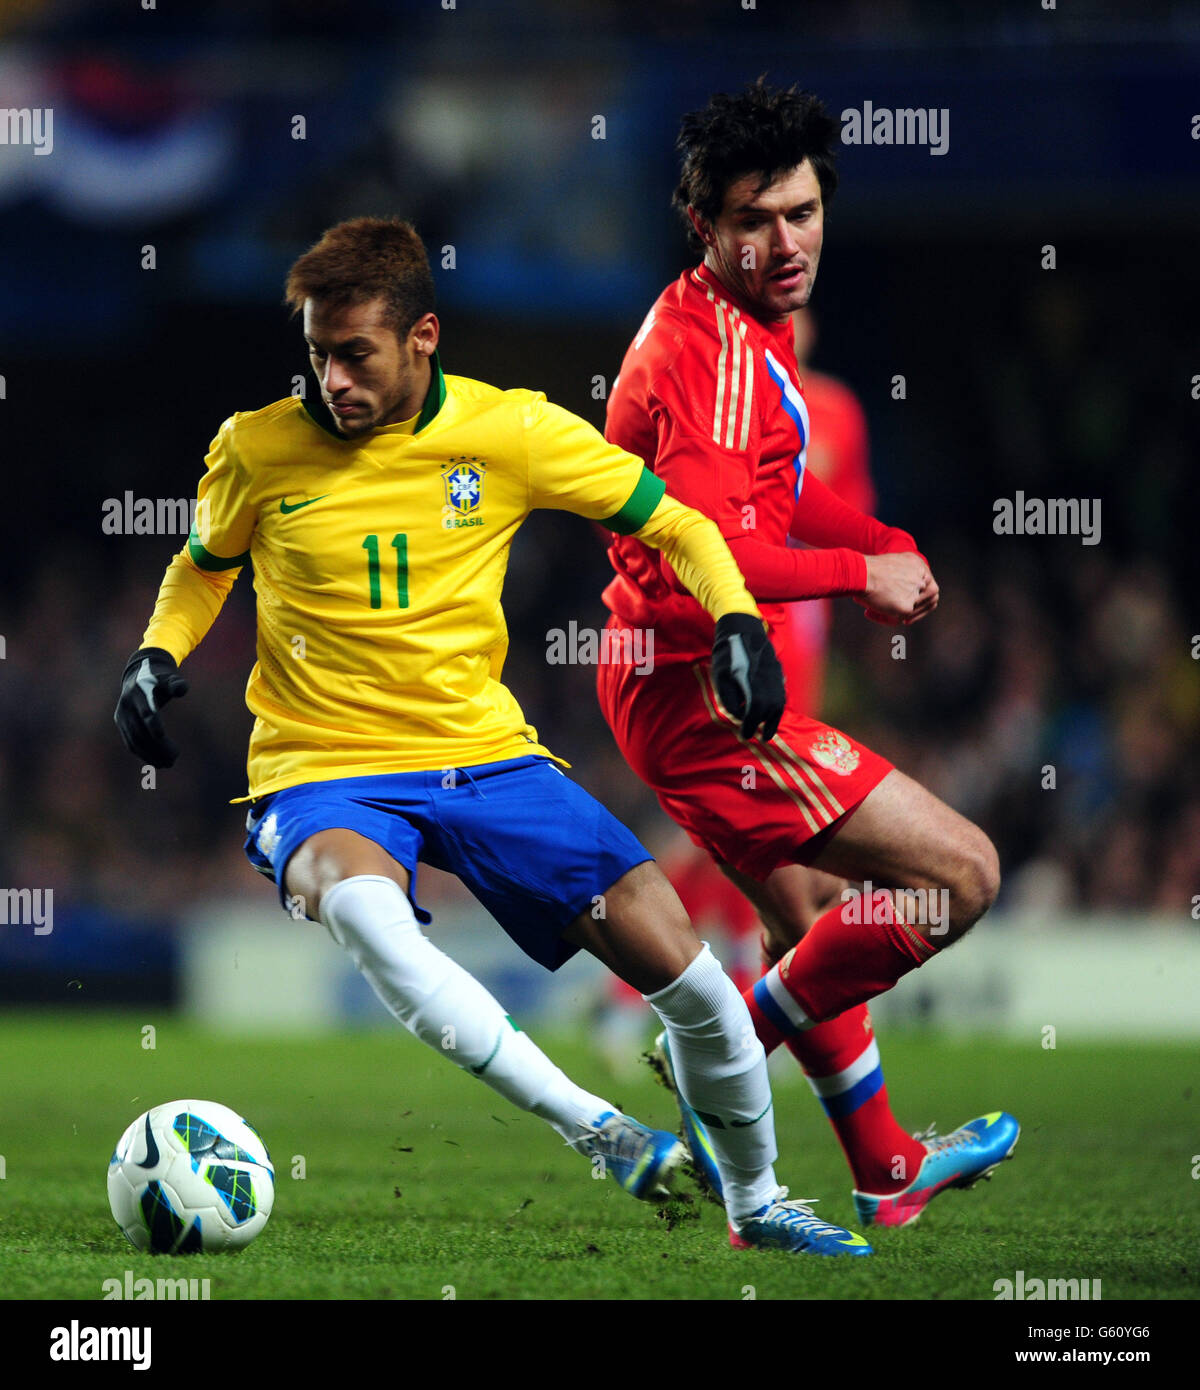 Soccer - International Friendly - Brazil v Russia - Stamford Bridge. Brazil's Neymar and Russia's Yury Zhirkov during the International match at Stamford Bridge, London. Stock Photo